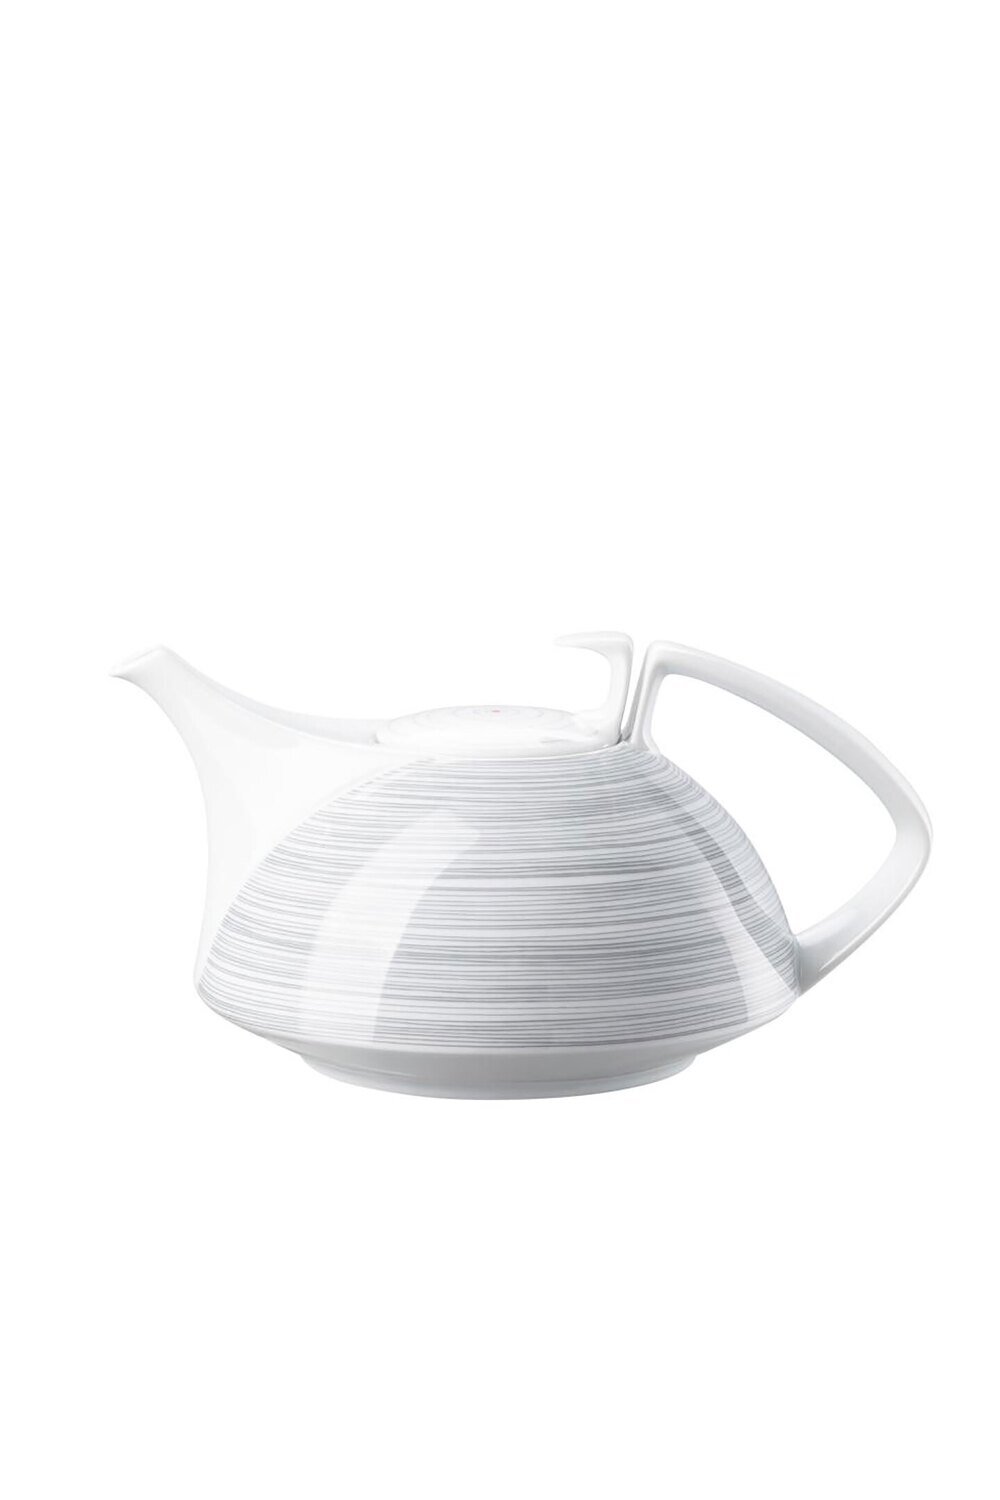 Rosenthal TAC Stripes 2.0 Tea Pot 45 oz